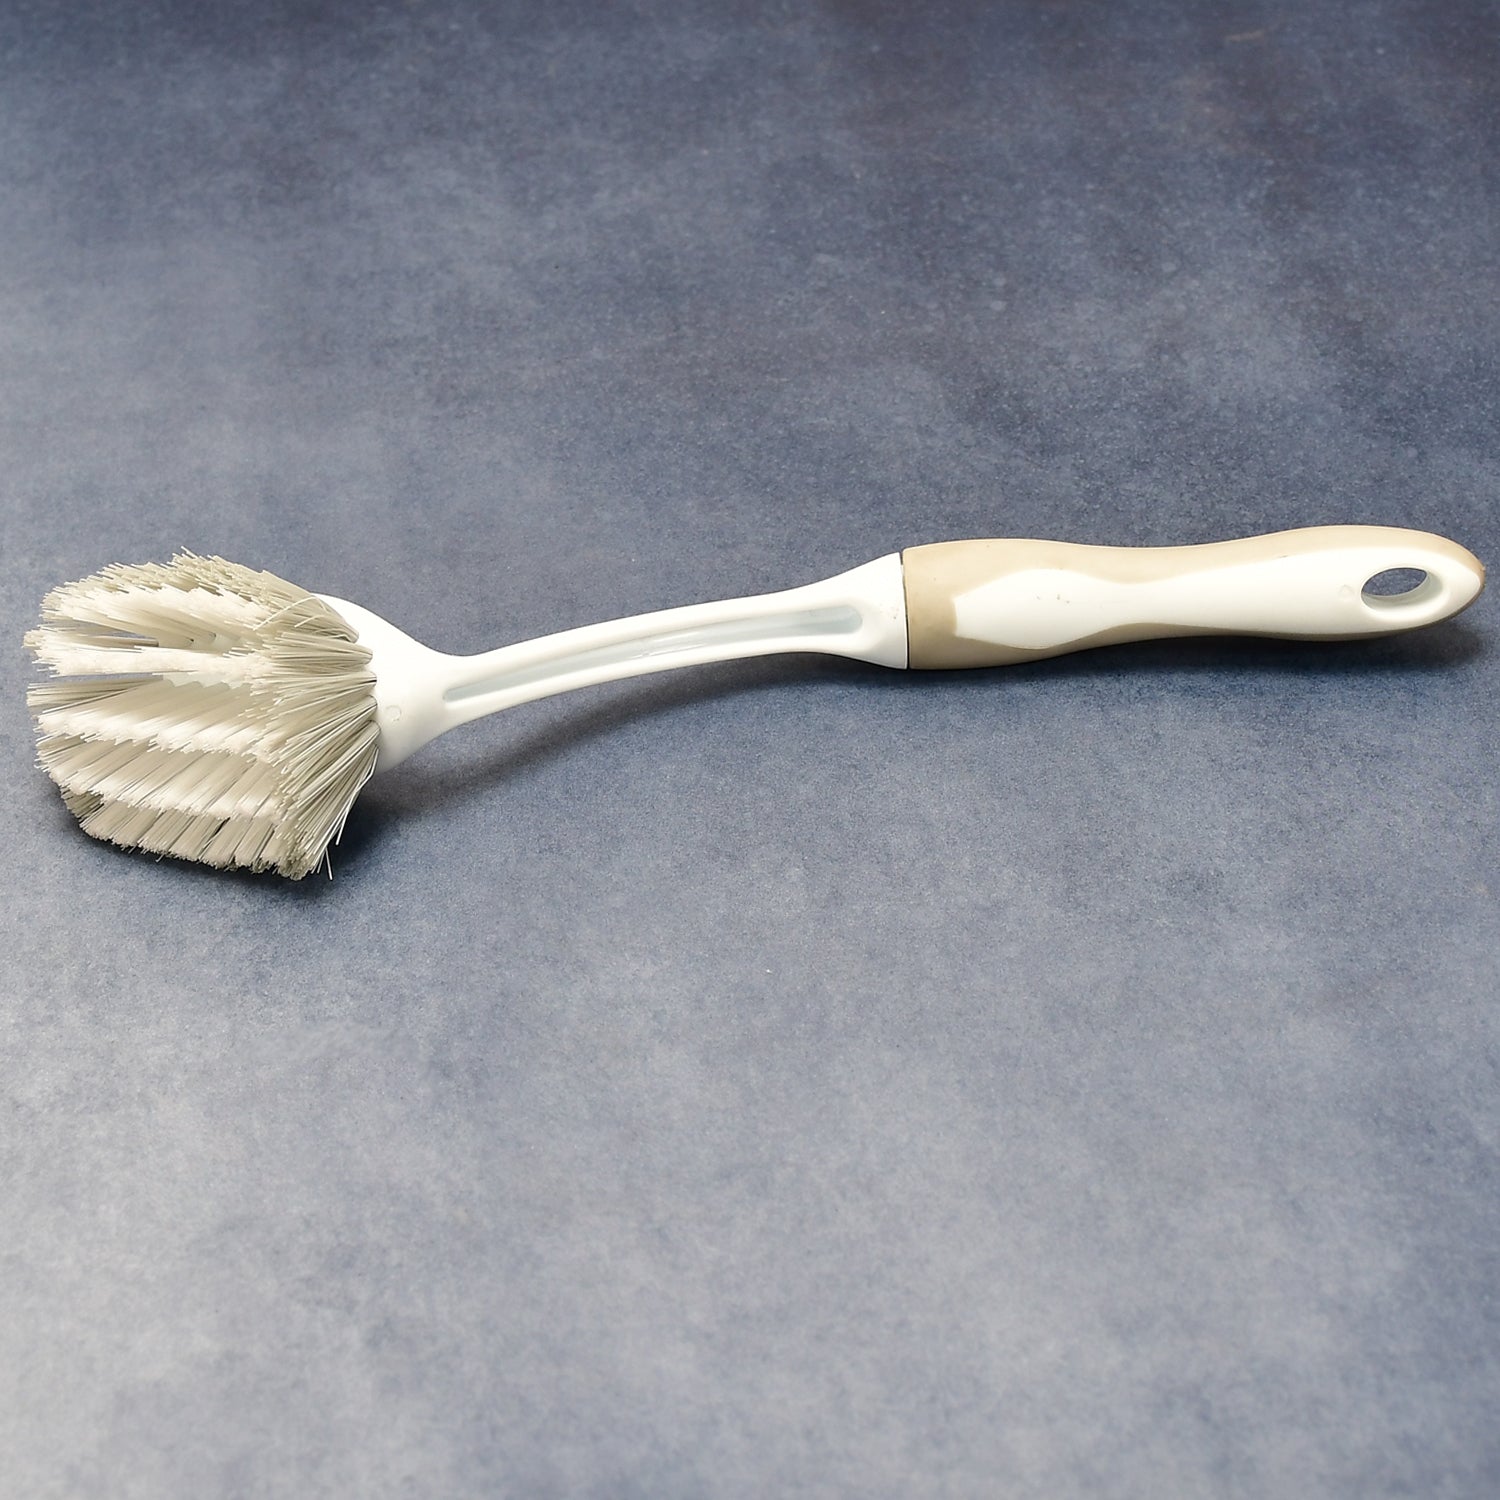 6693 Flexible Bristles Use for Multipurpose Cleaning Sink, Washbasin, Toilets. Bathroom, Kitchen DeoDap